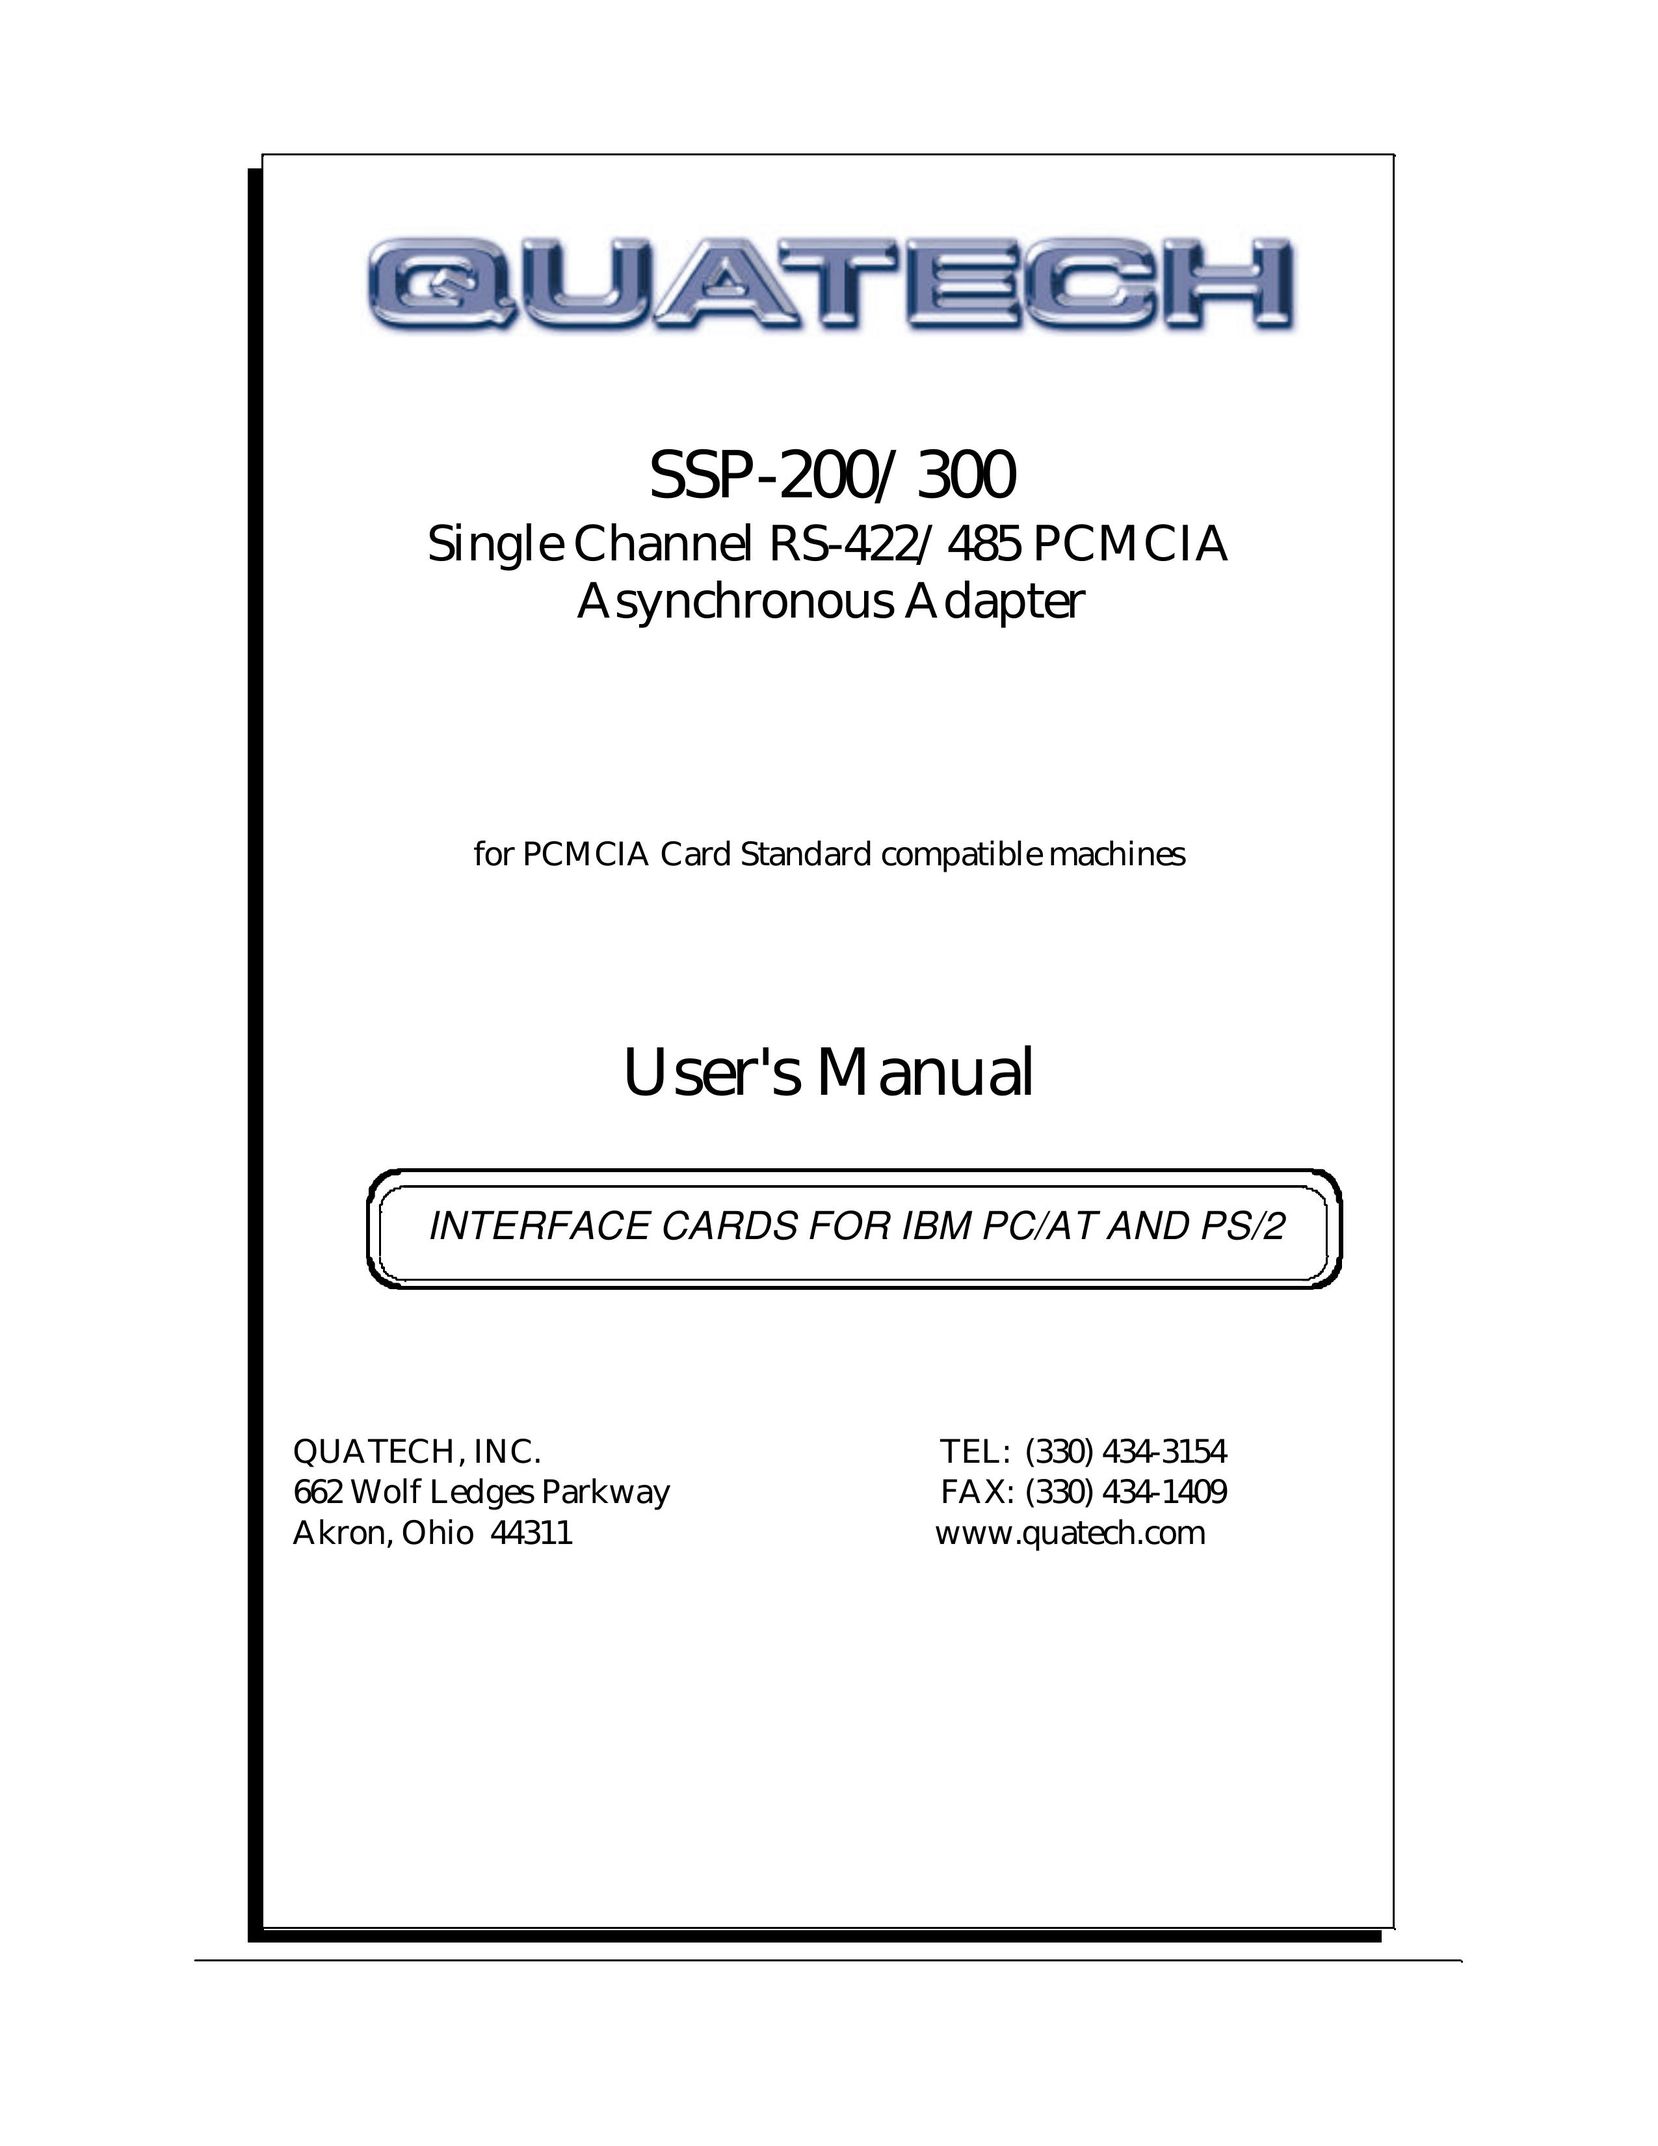 Quatech SSP-300 Network Card User Manual